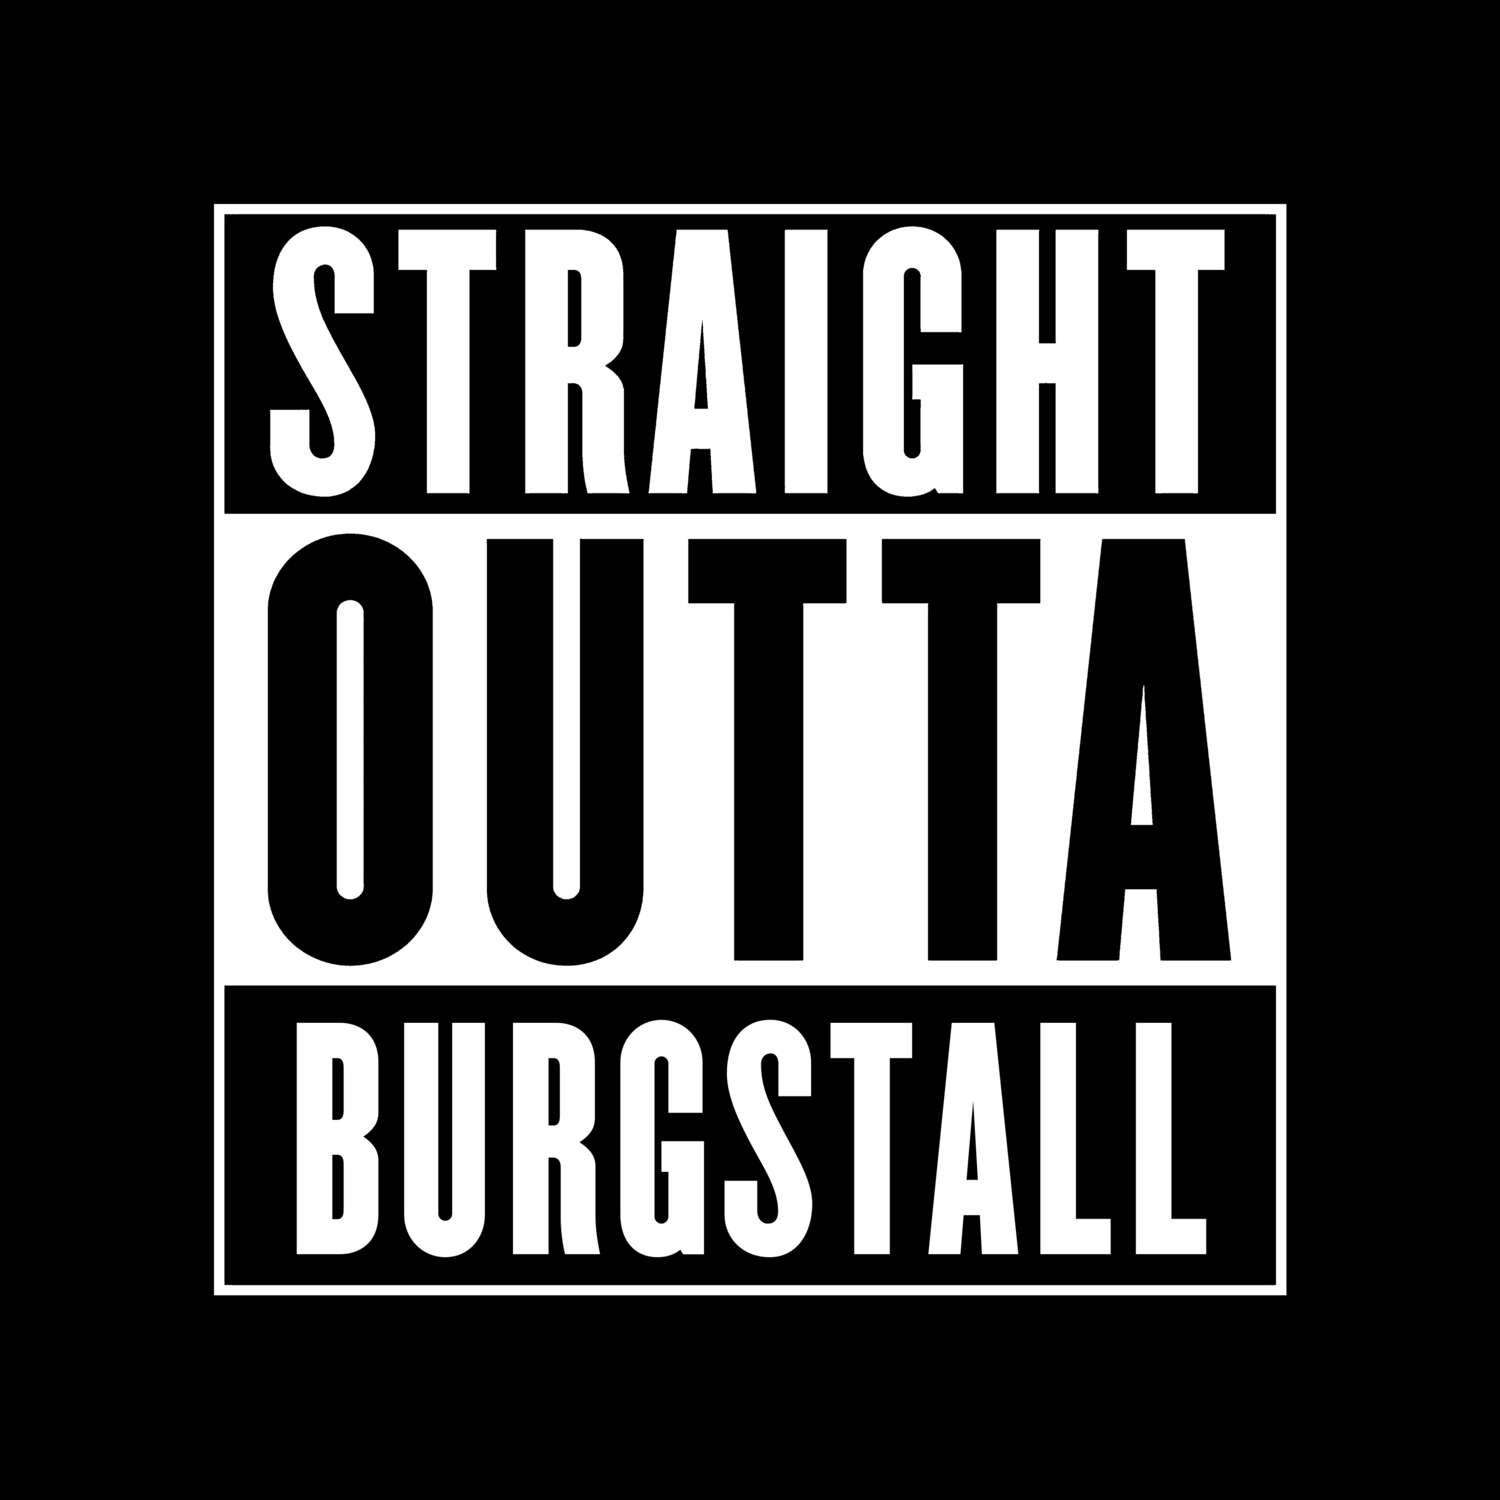 Burgstall T-Shirt »Straight Outta«